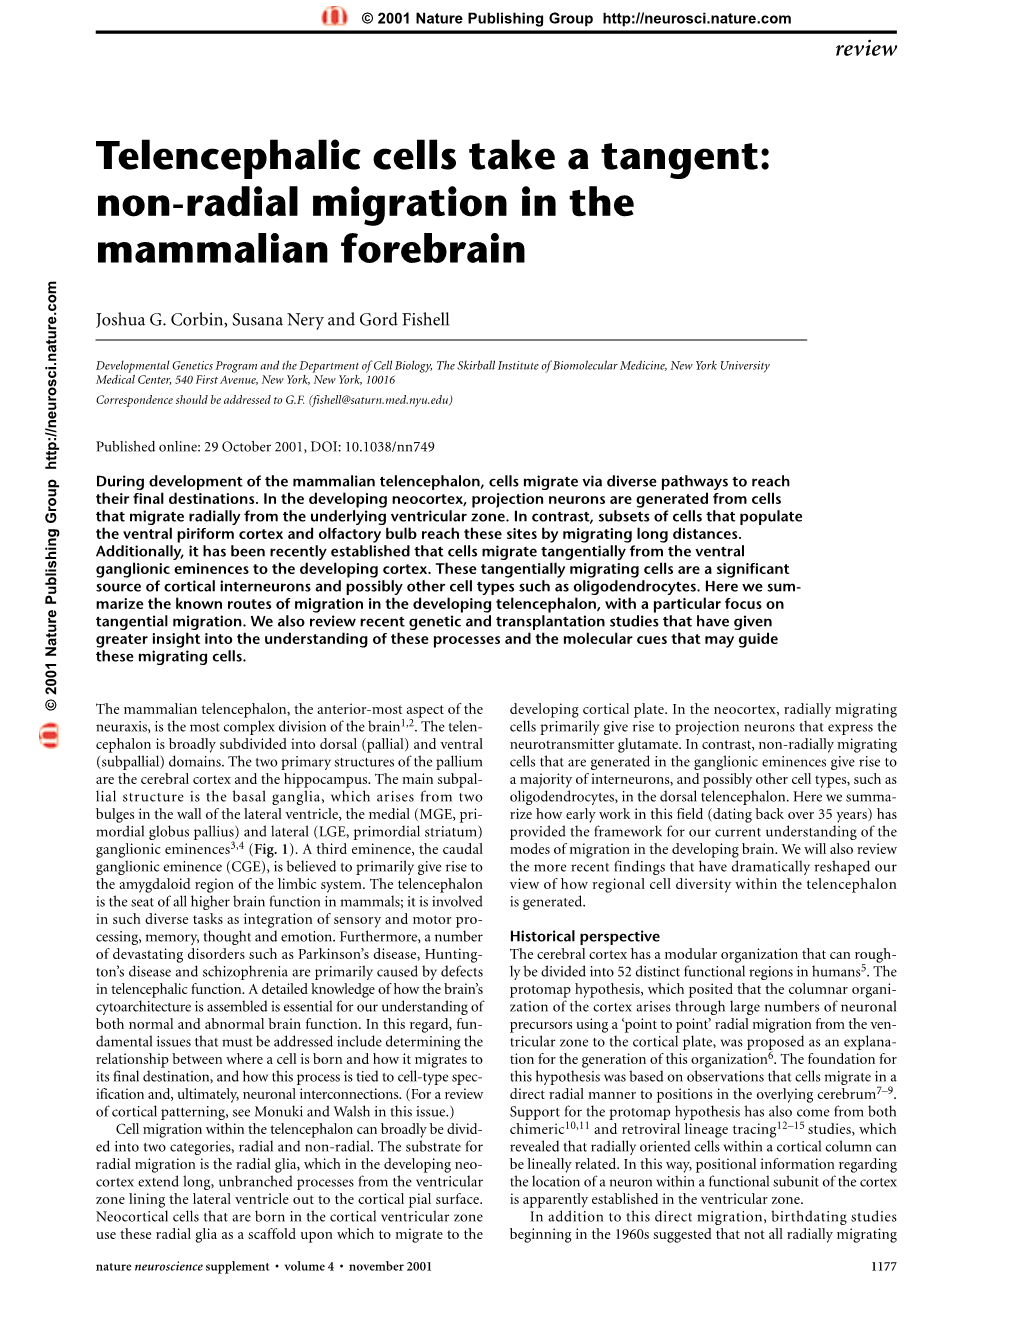 Telencephalic Cells Take a Tangent: Non-Radial Migration in the Mammalian Forebrain